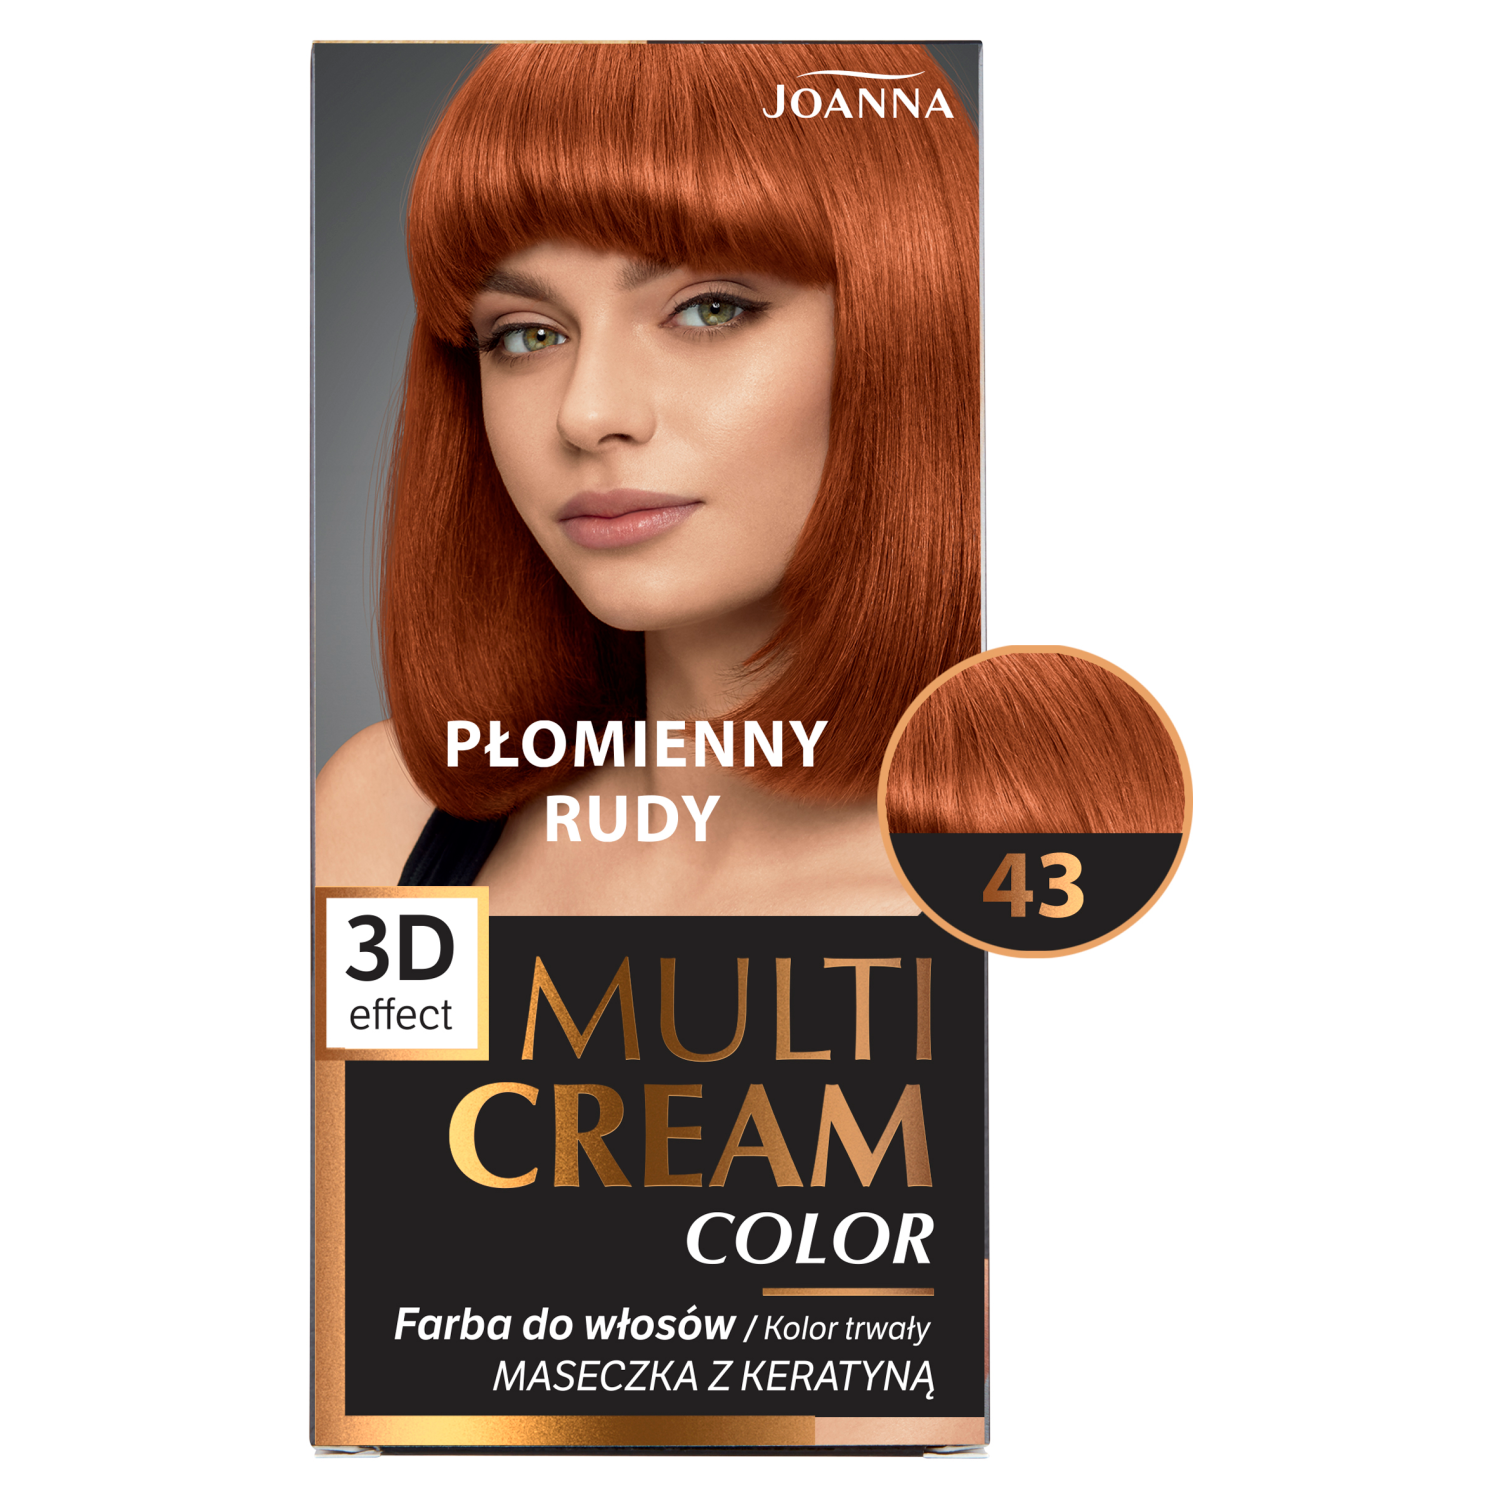 Joanna Multi Cream Color farba do włosów 43 płomienny rudy, 1 opak. |  hebe.pl